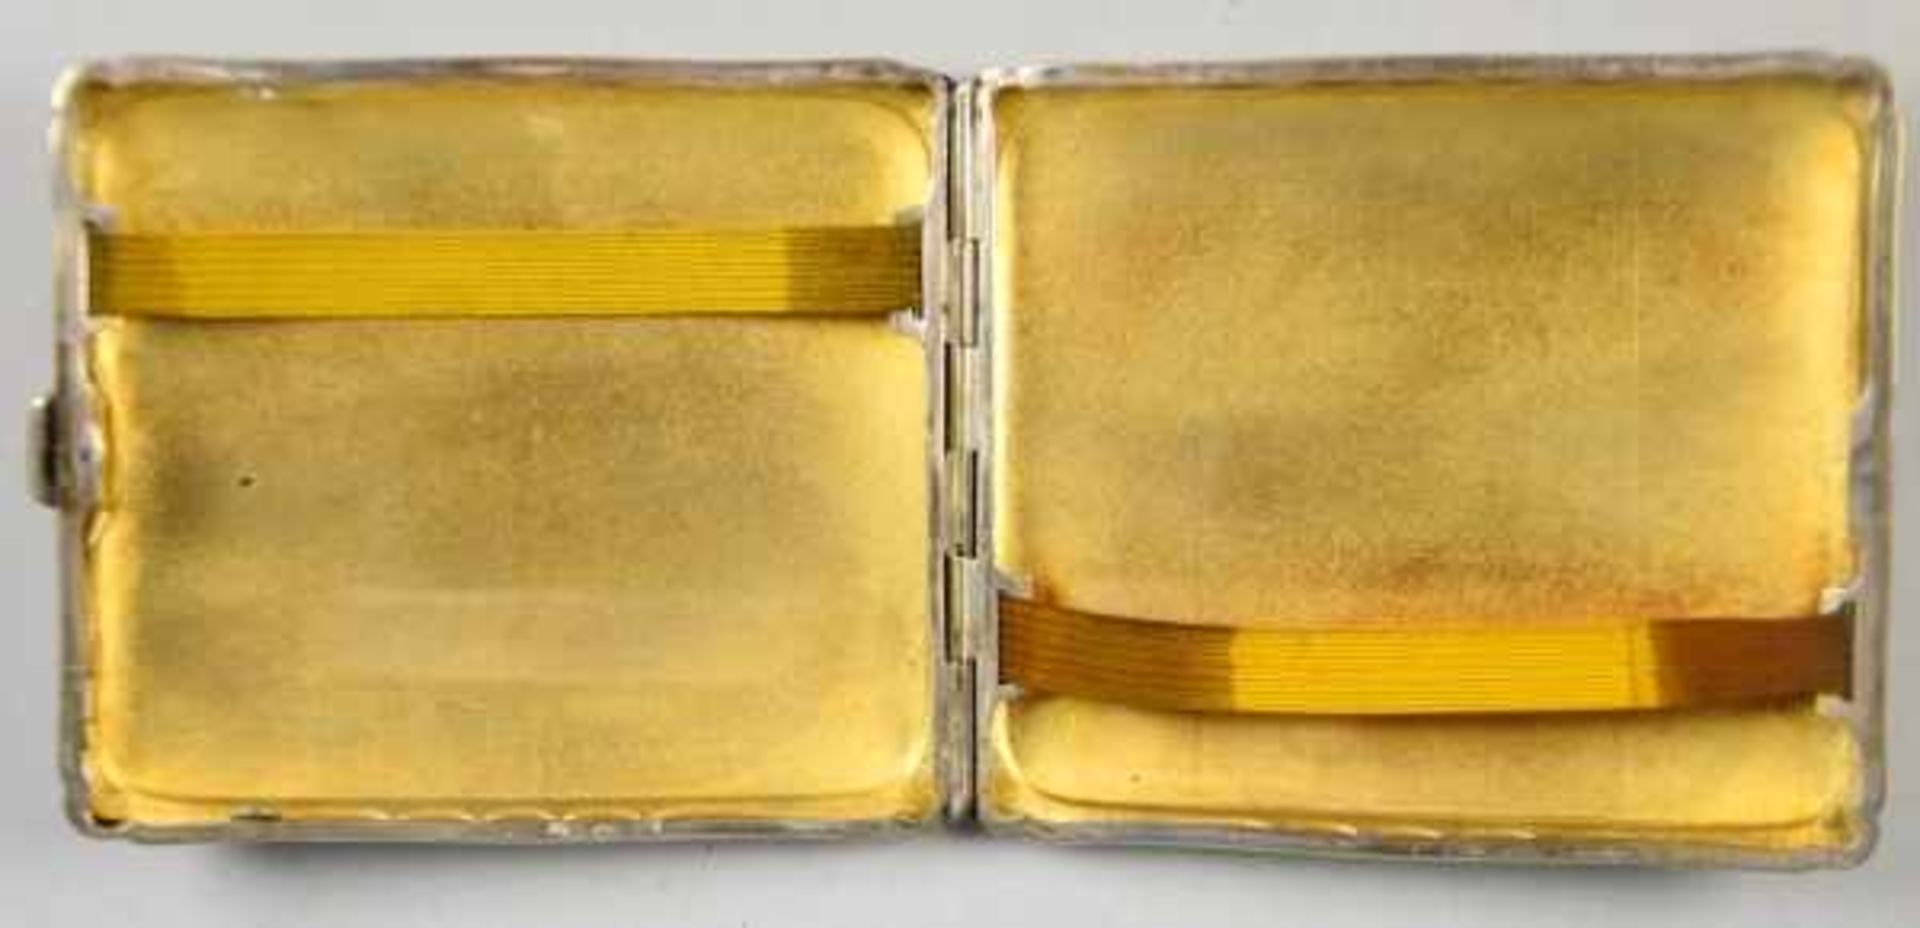 ZIGARETTENETUI rechteckige Form, Oberfläche mit ziseliertem Dekor, Innenvergoldung, Robert Kraft, - Bild 3 aus 5